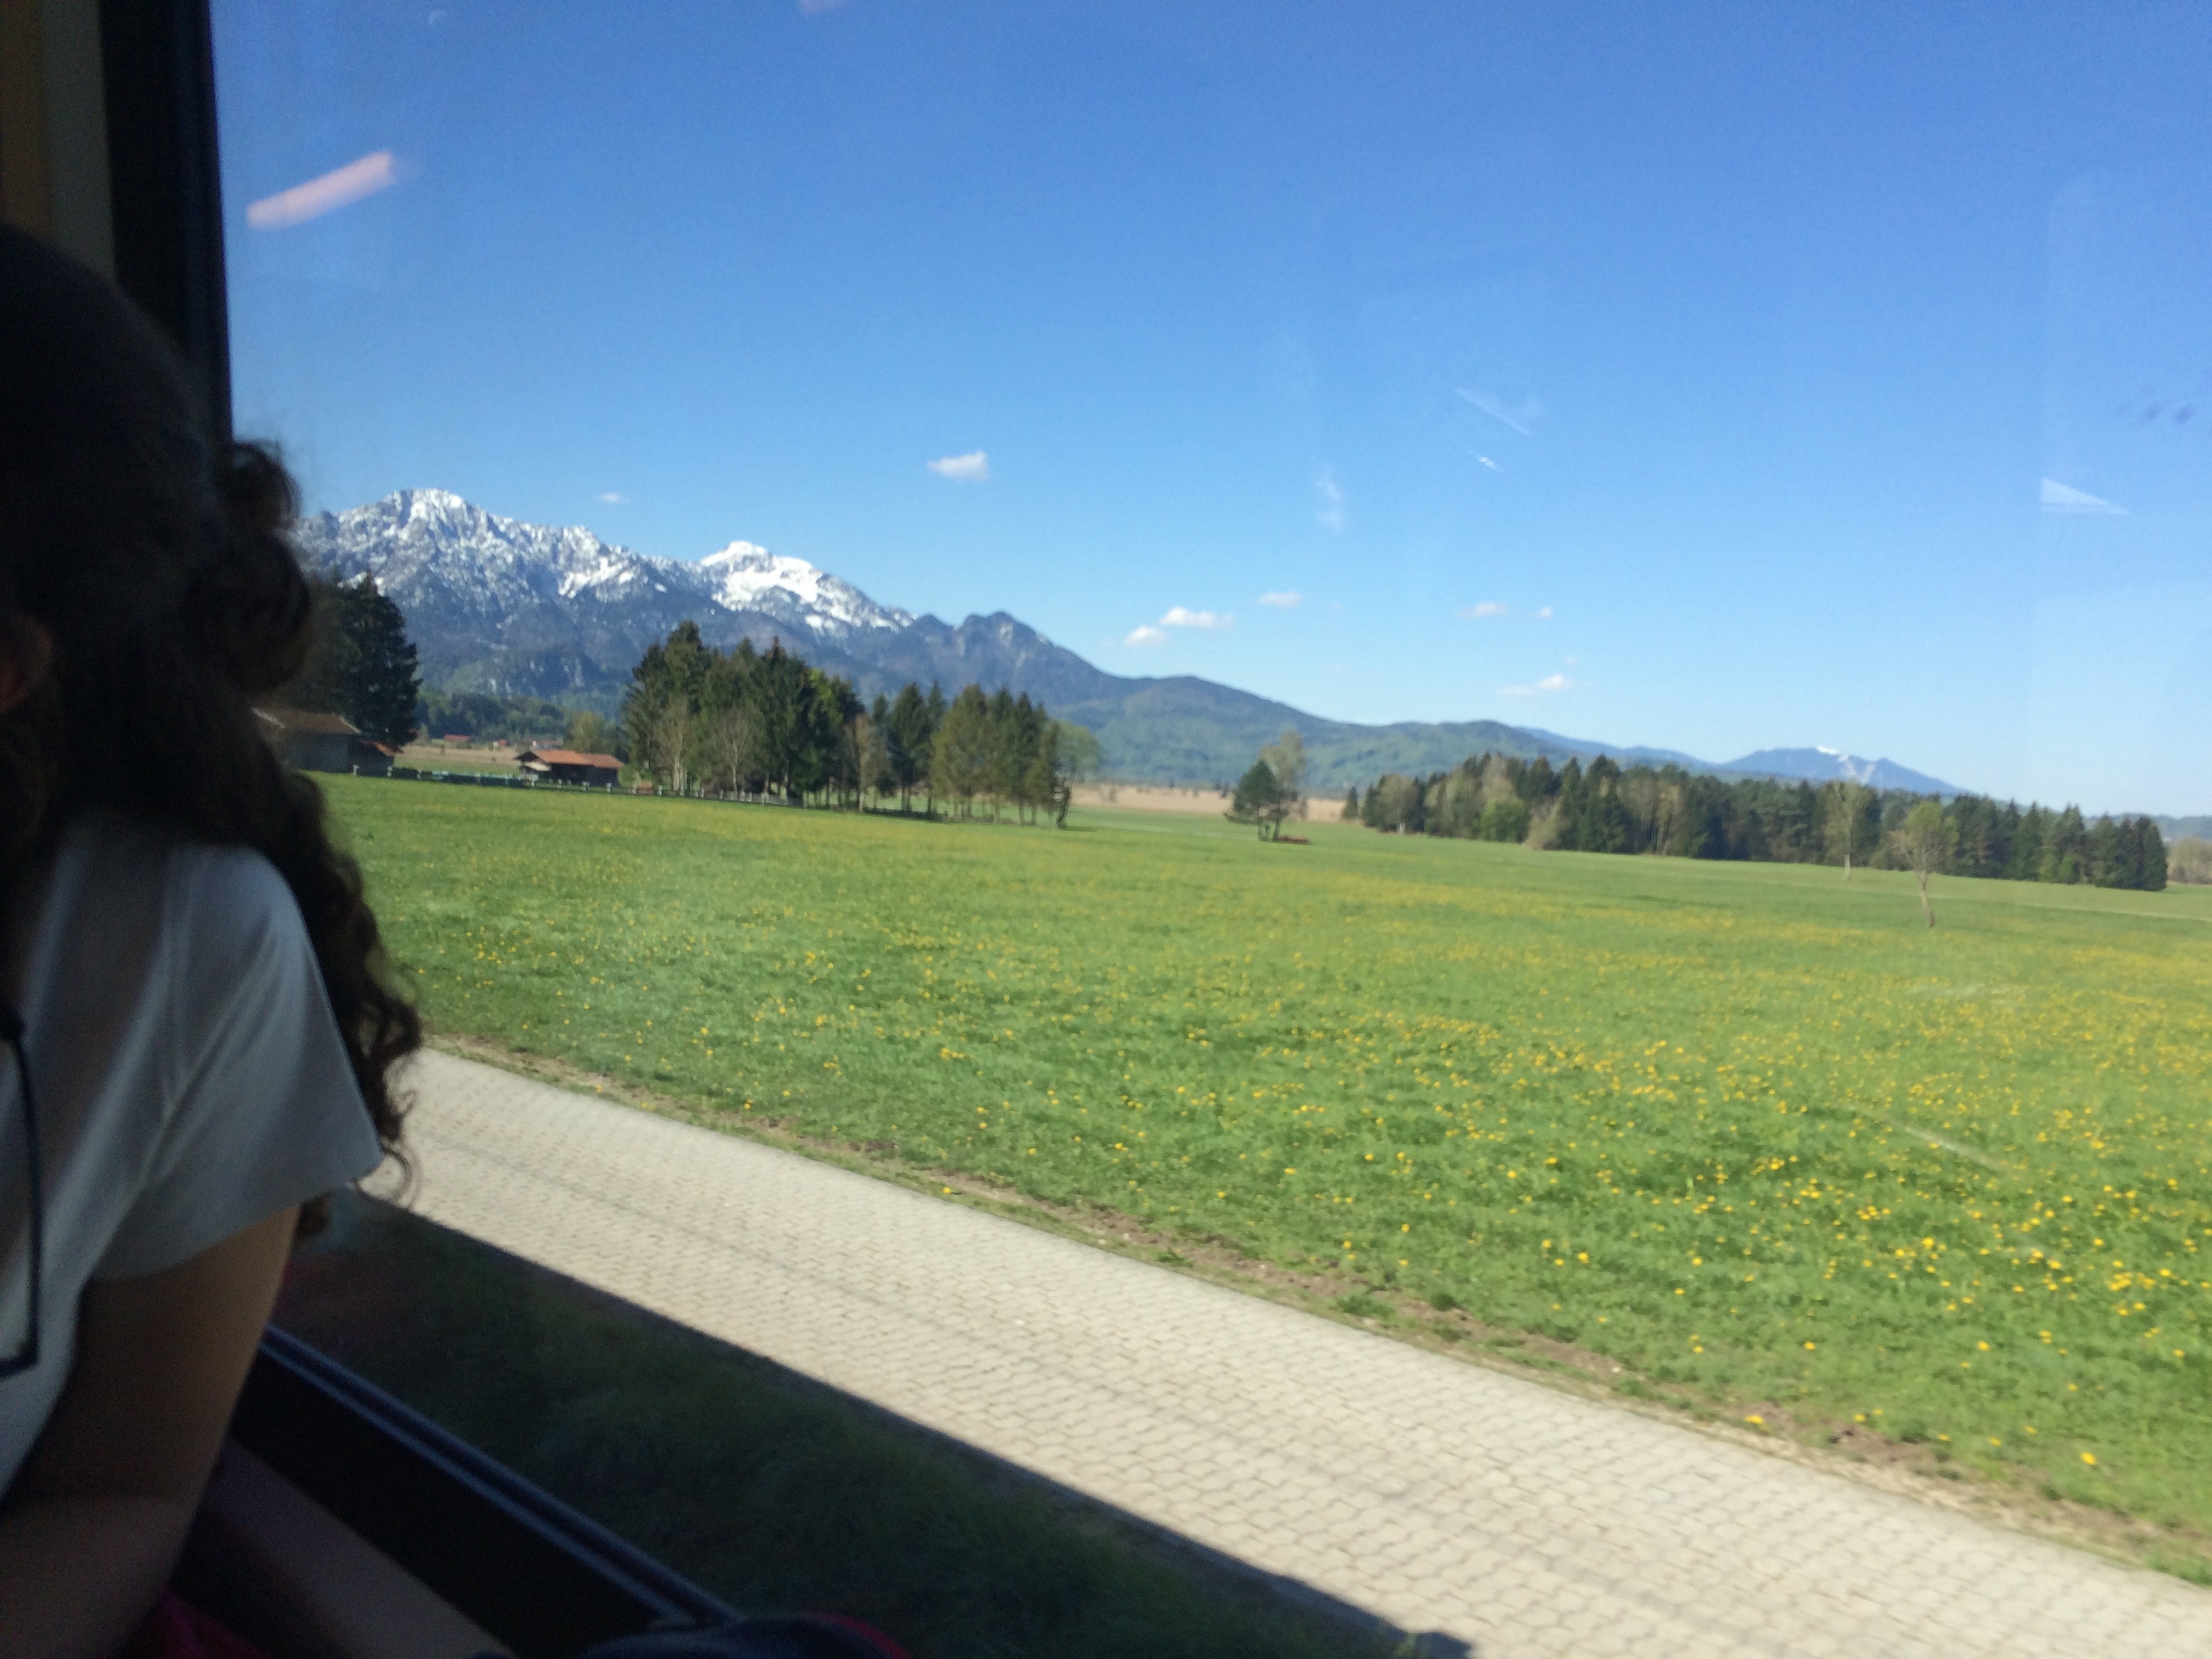 Train Ride to Kochel am See